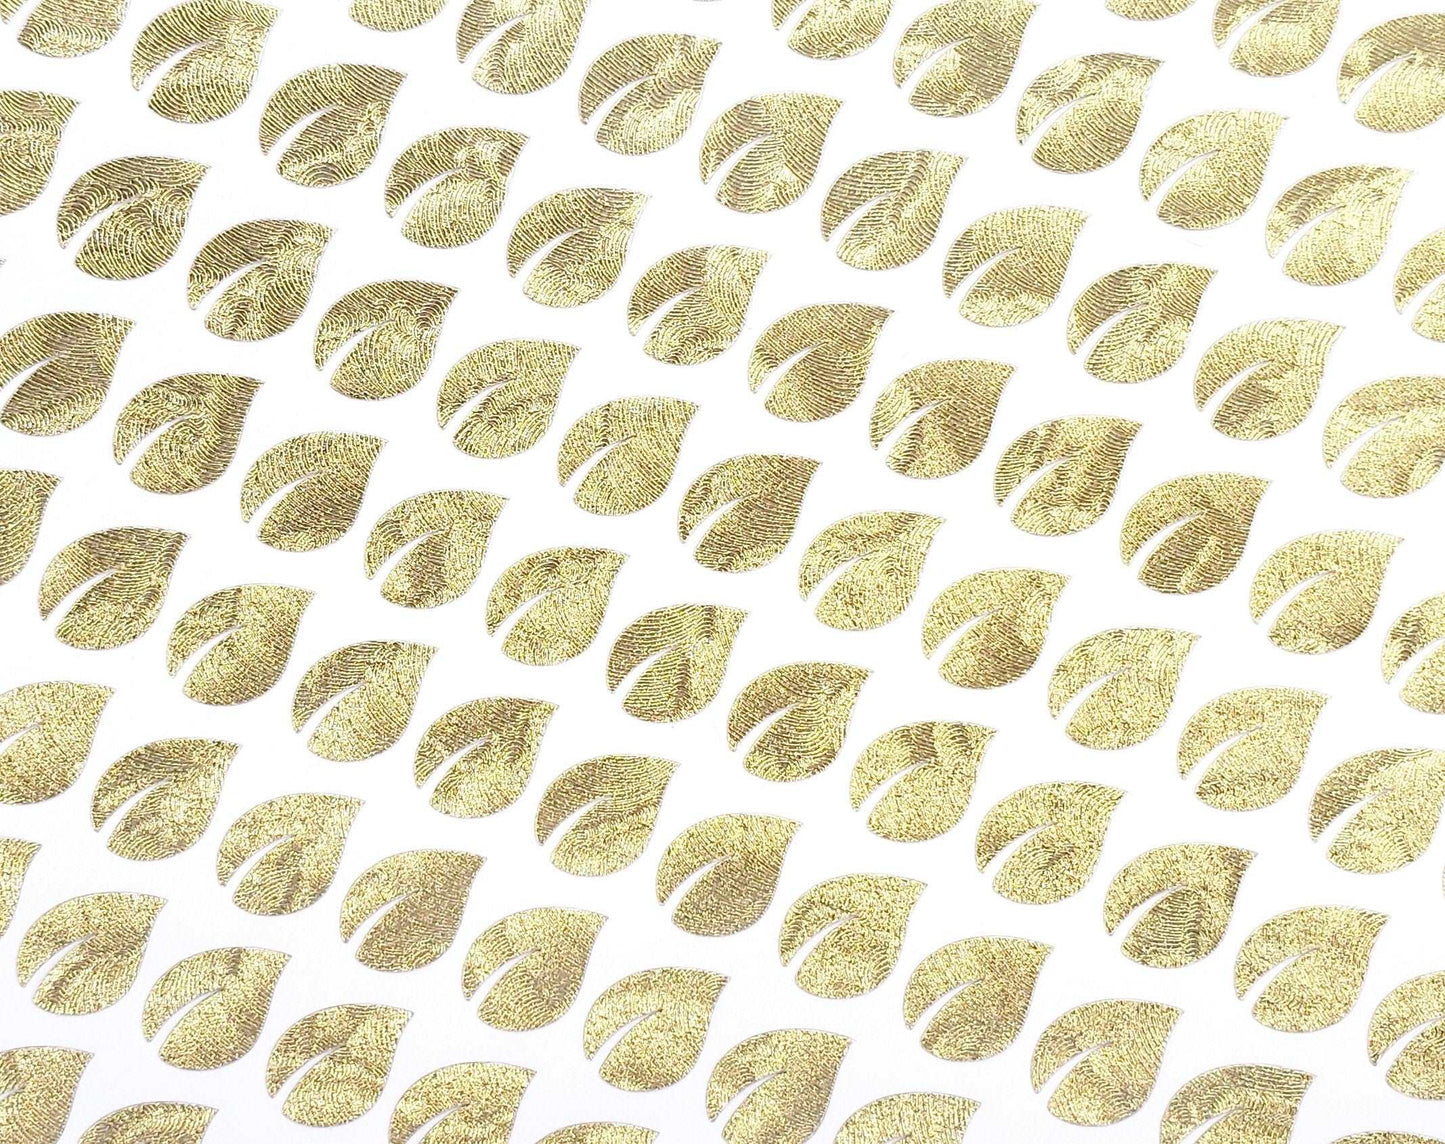 Leaf Mini Stickies, set of 195 gold metallic tiny leaf decals.